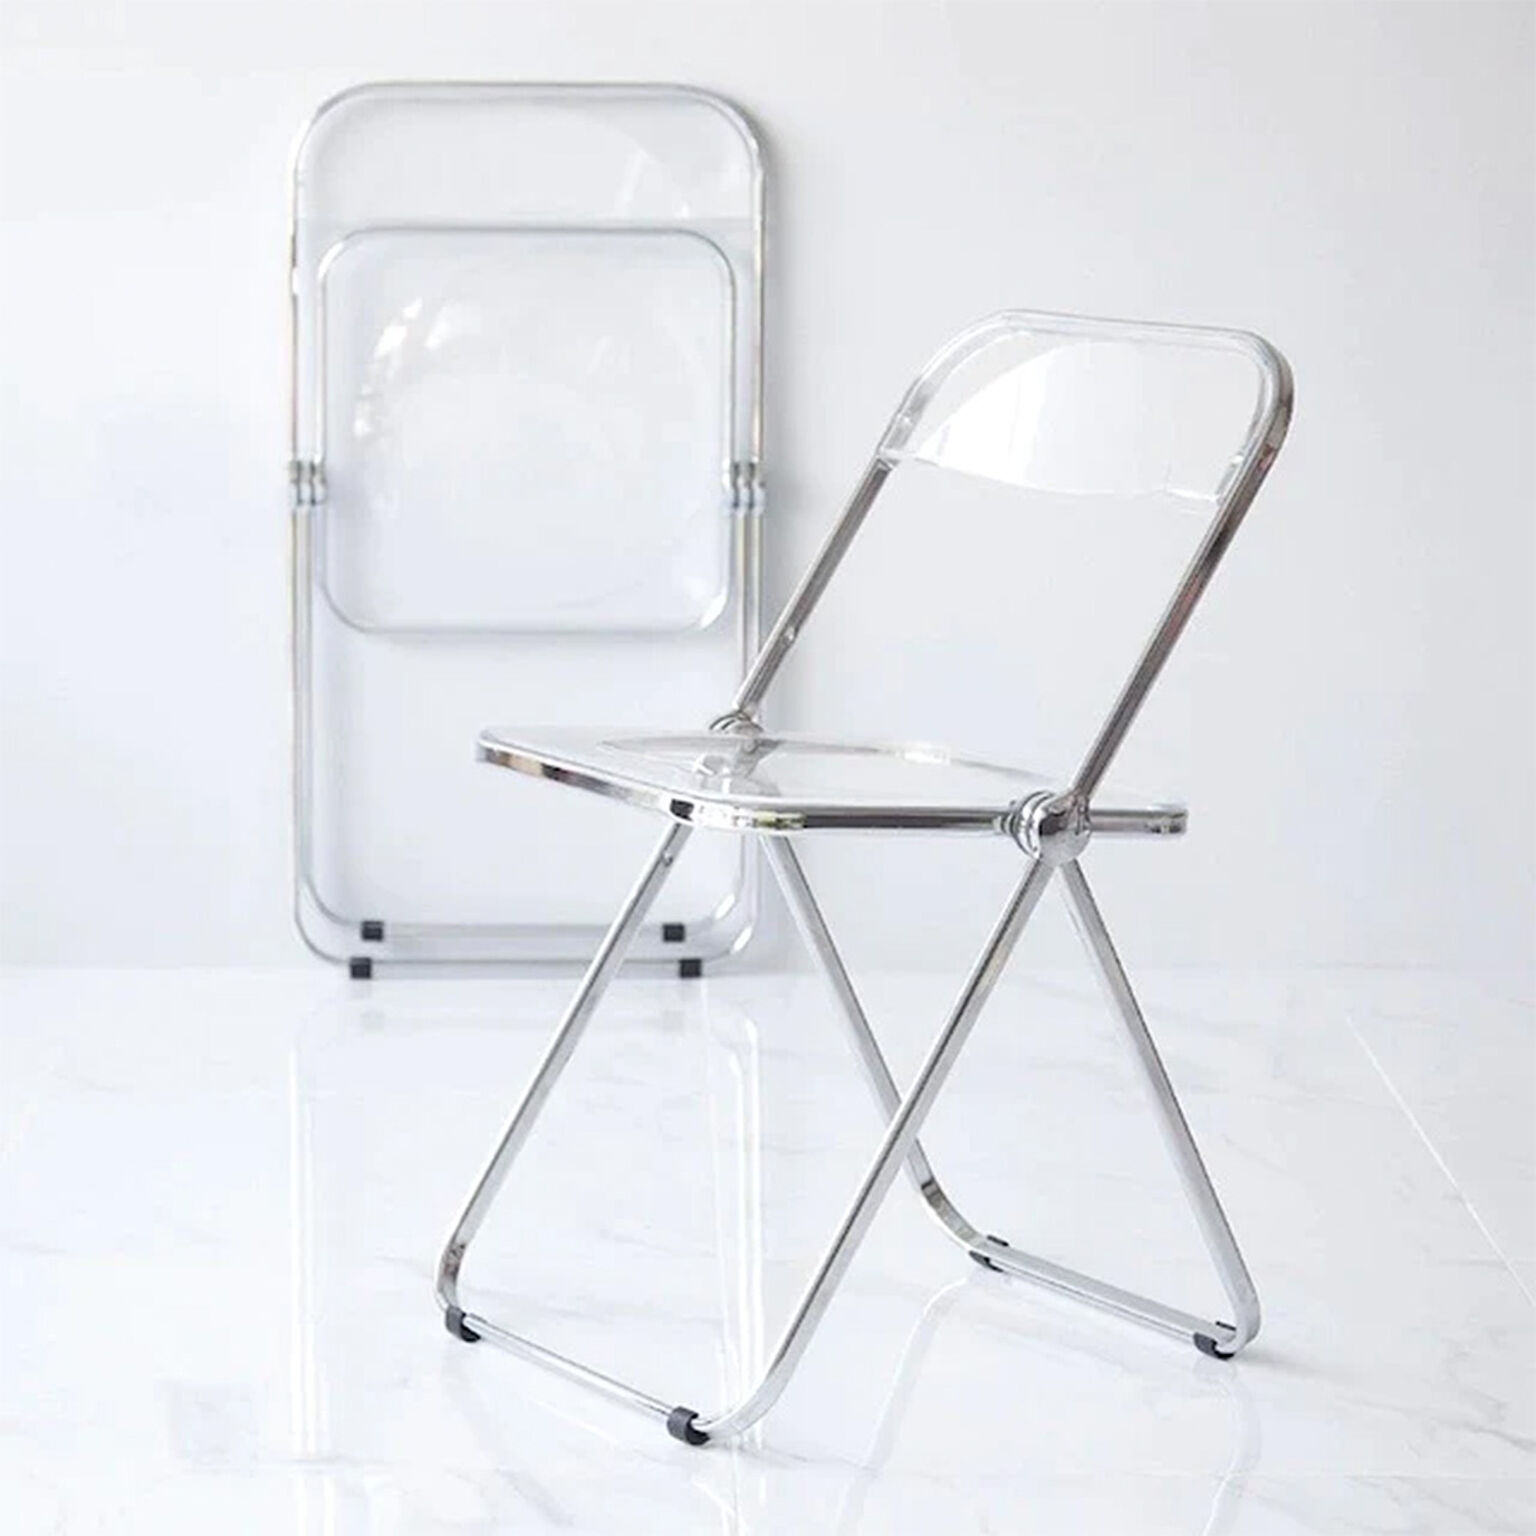 Bauhaus Japan Clear モダン 折りたたみ椅子 ダイニングチェア Transparent